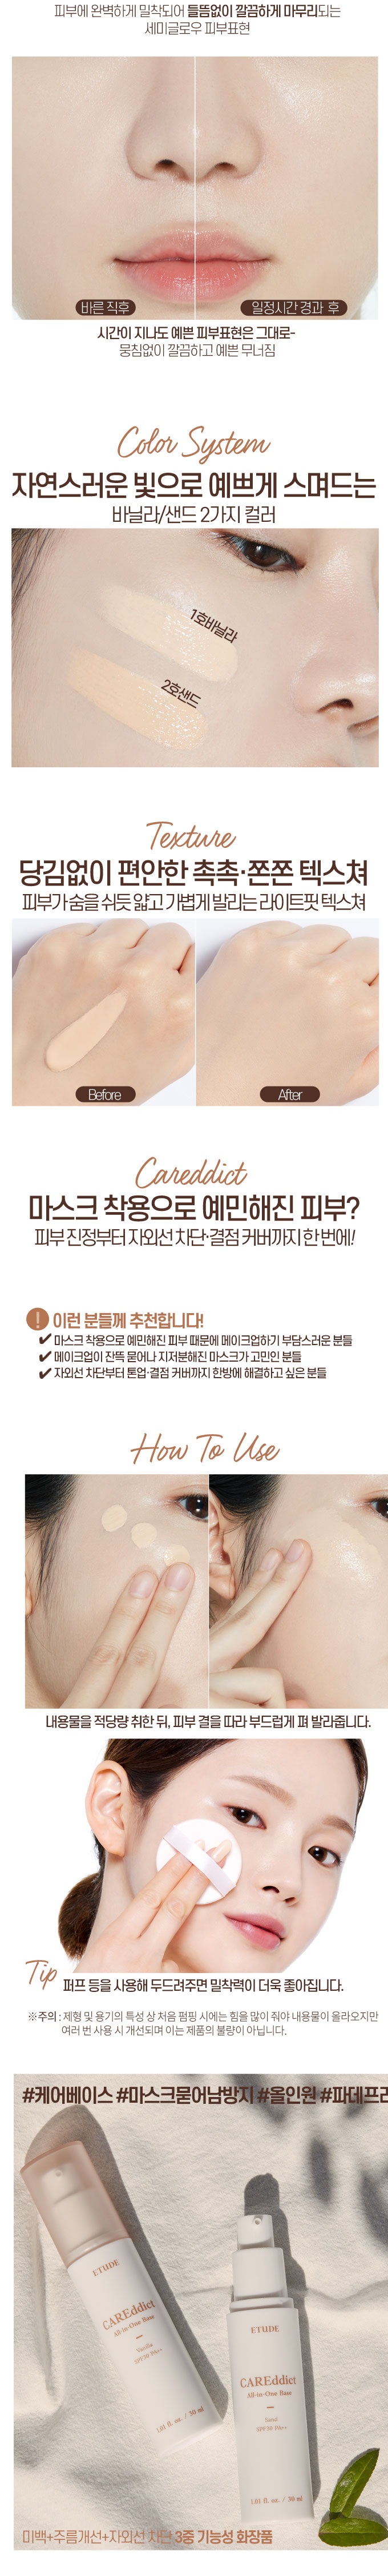 Etude House Careddict All In One Base korean skincare product online shop malaysia china india3